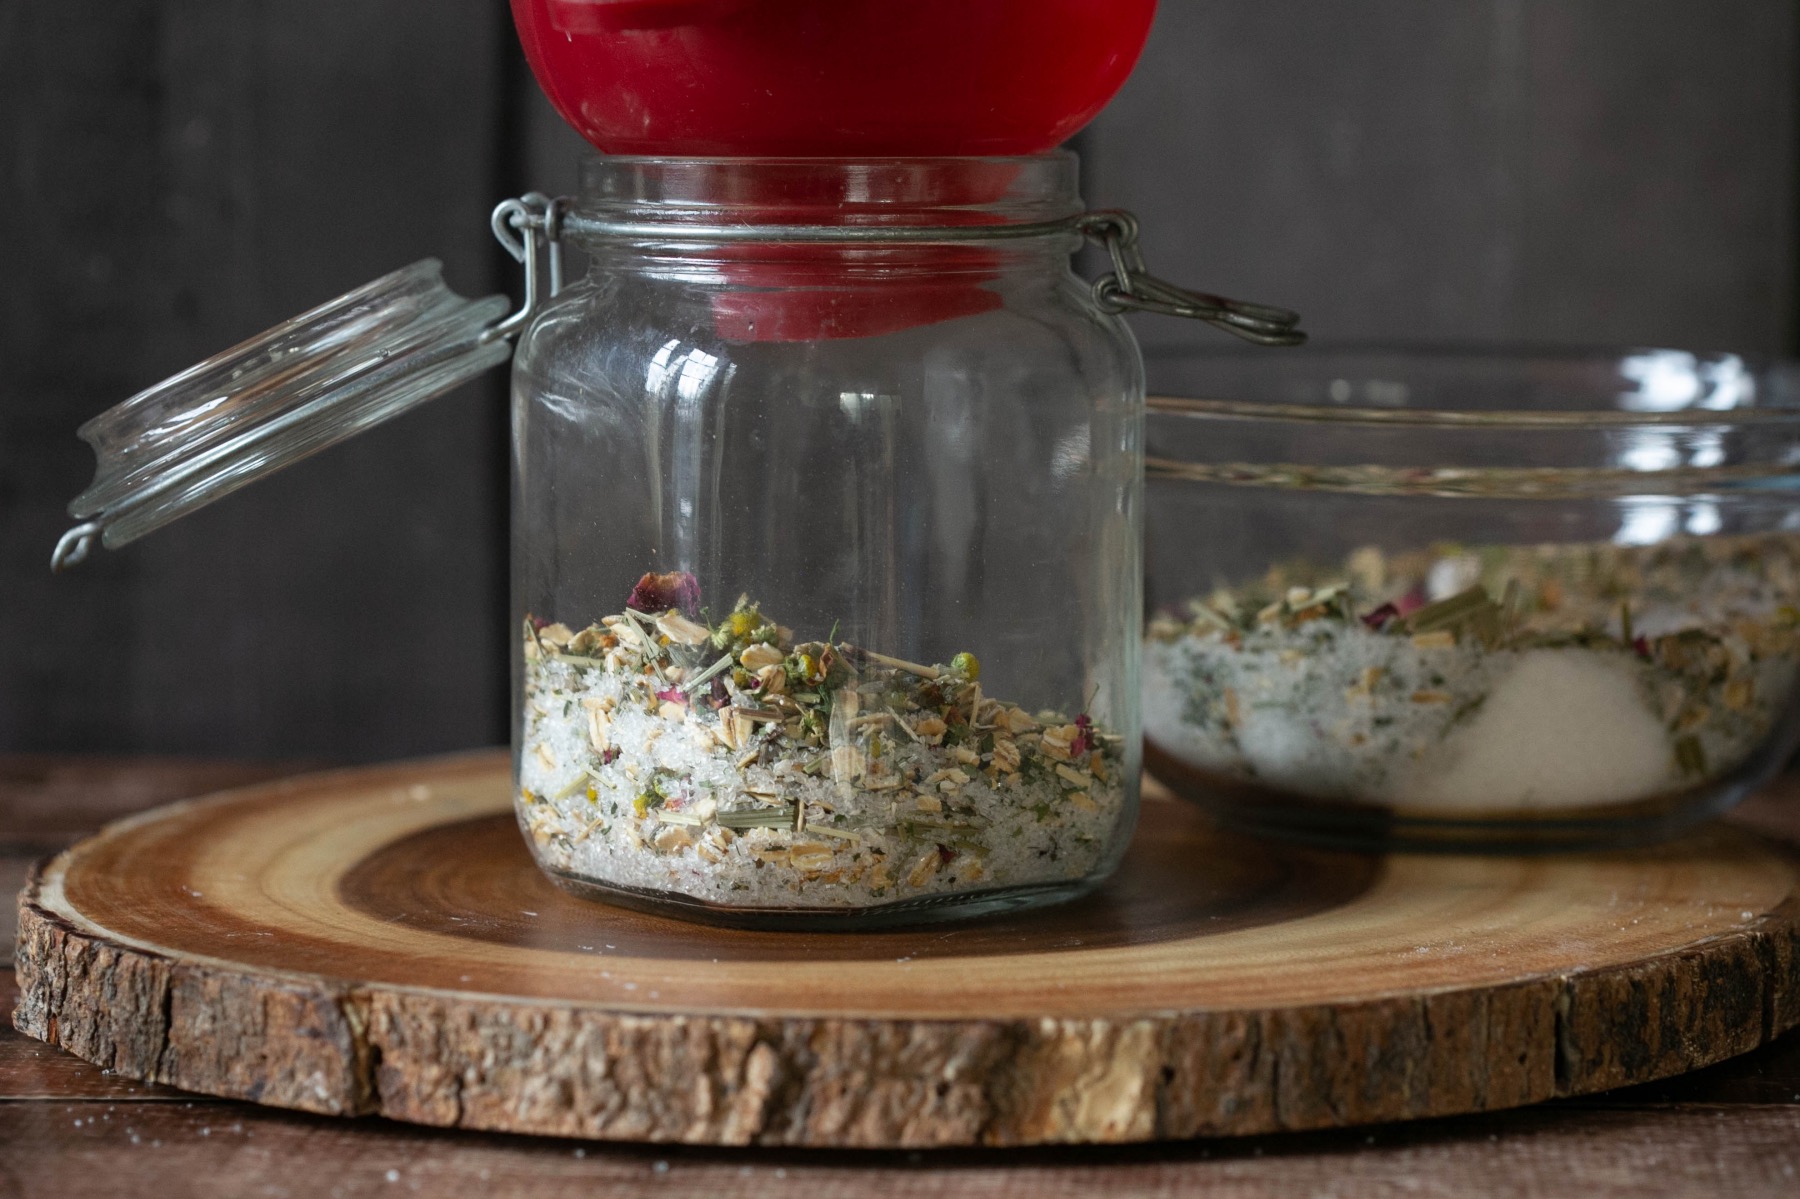 pour forest bath soaks ingredients into a glass jar